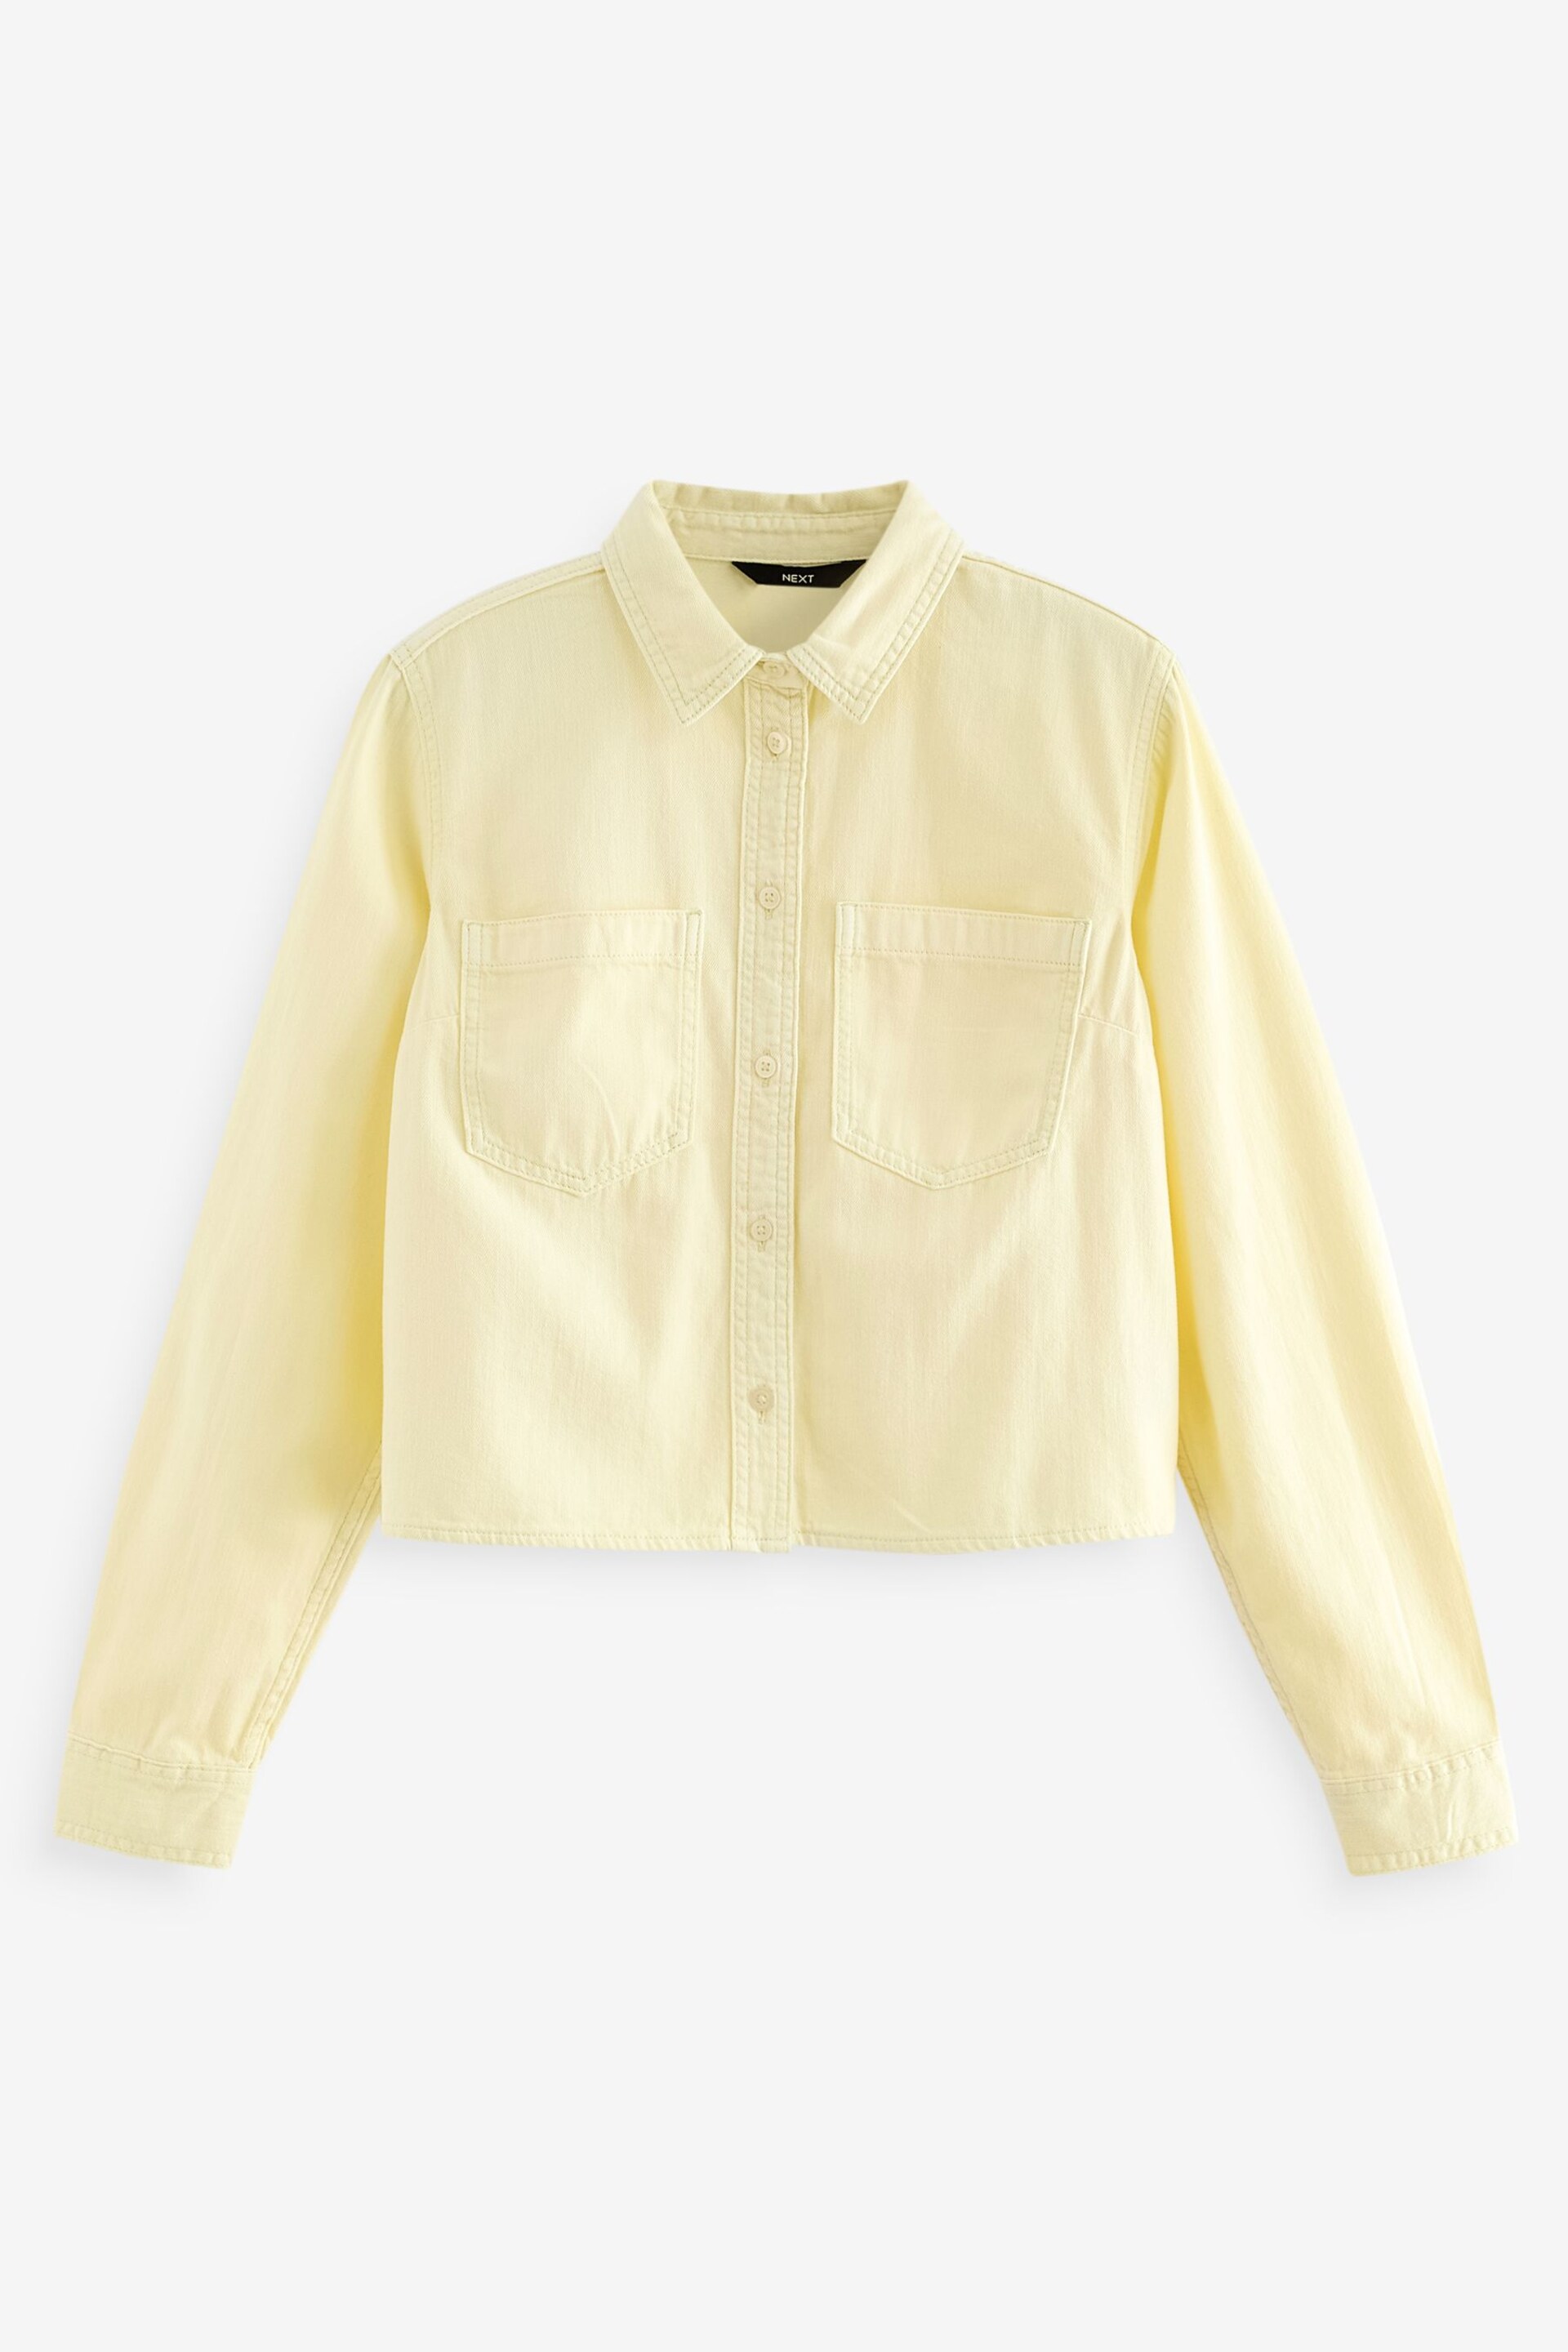 Lemon Yellow Cropped Denim Shirt - Image 5 of 6